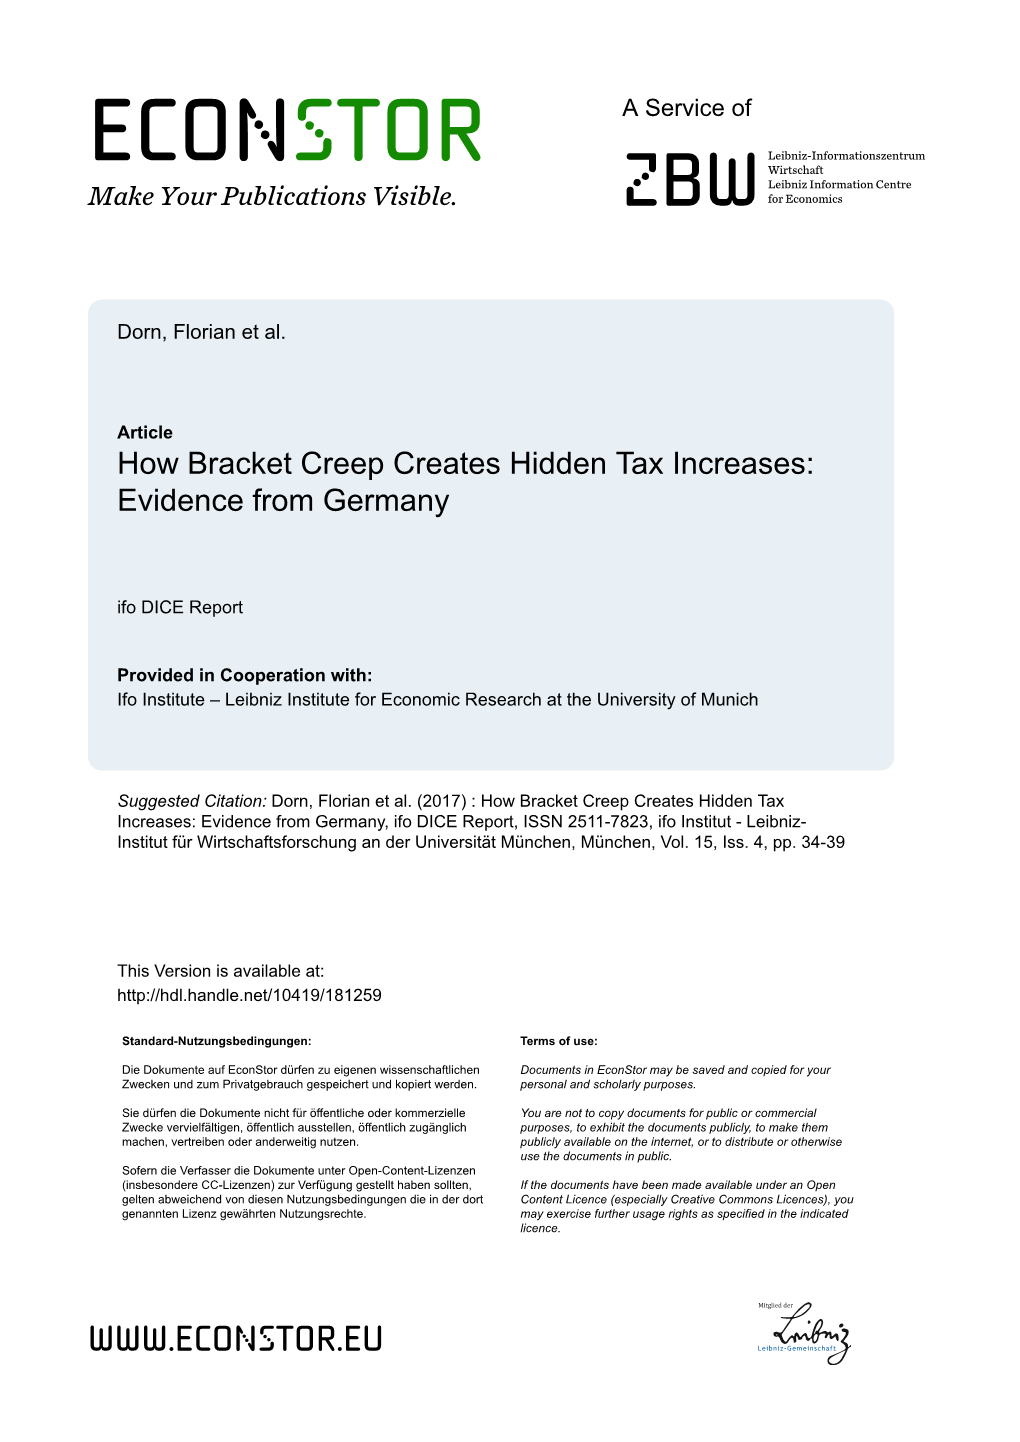 How Bracket Creep Creates Hidden Tax Increases: Evidence from Germany